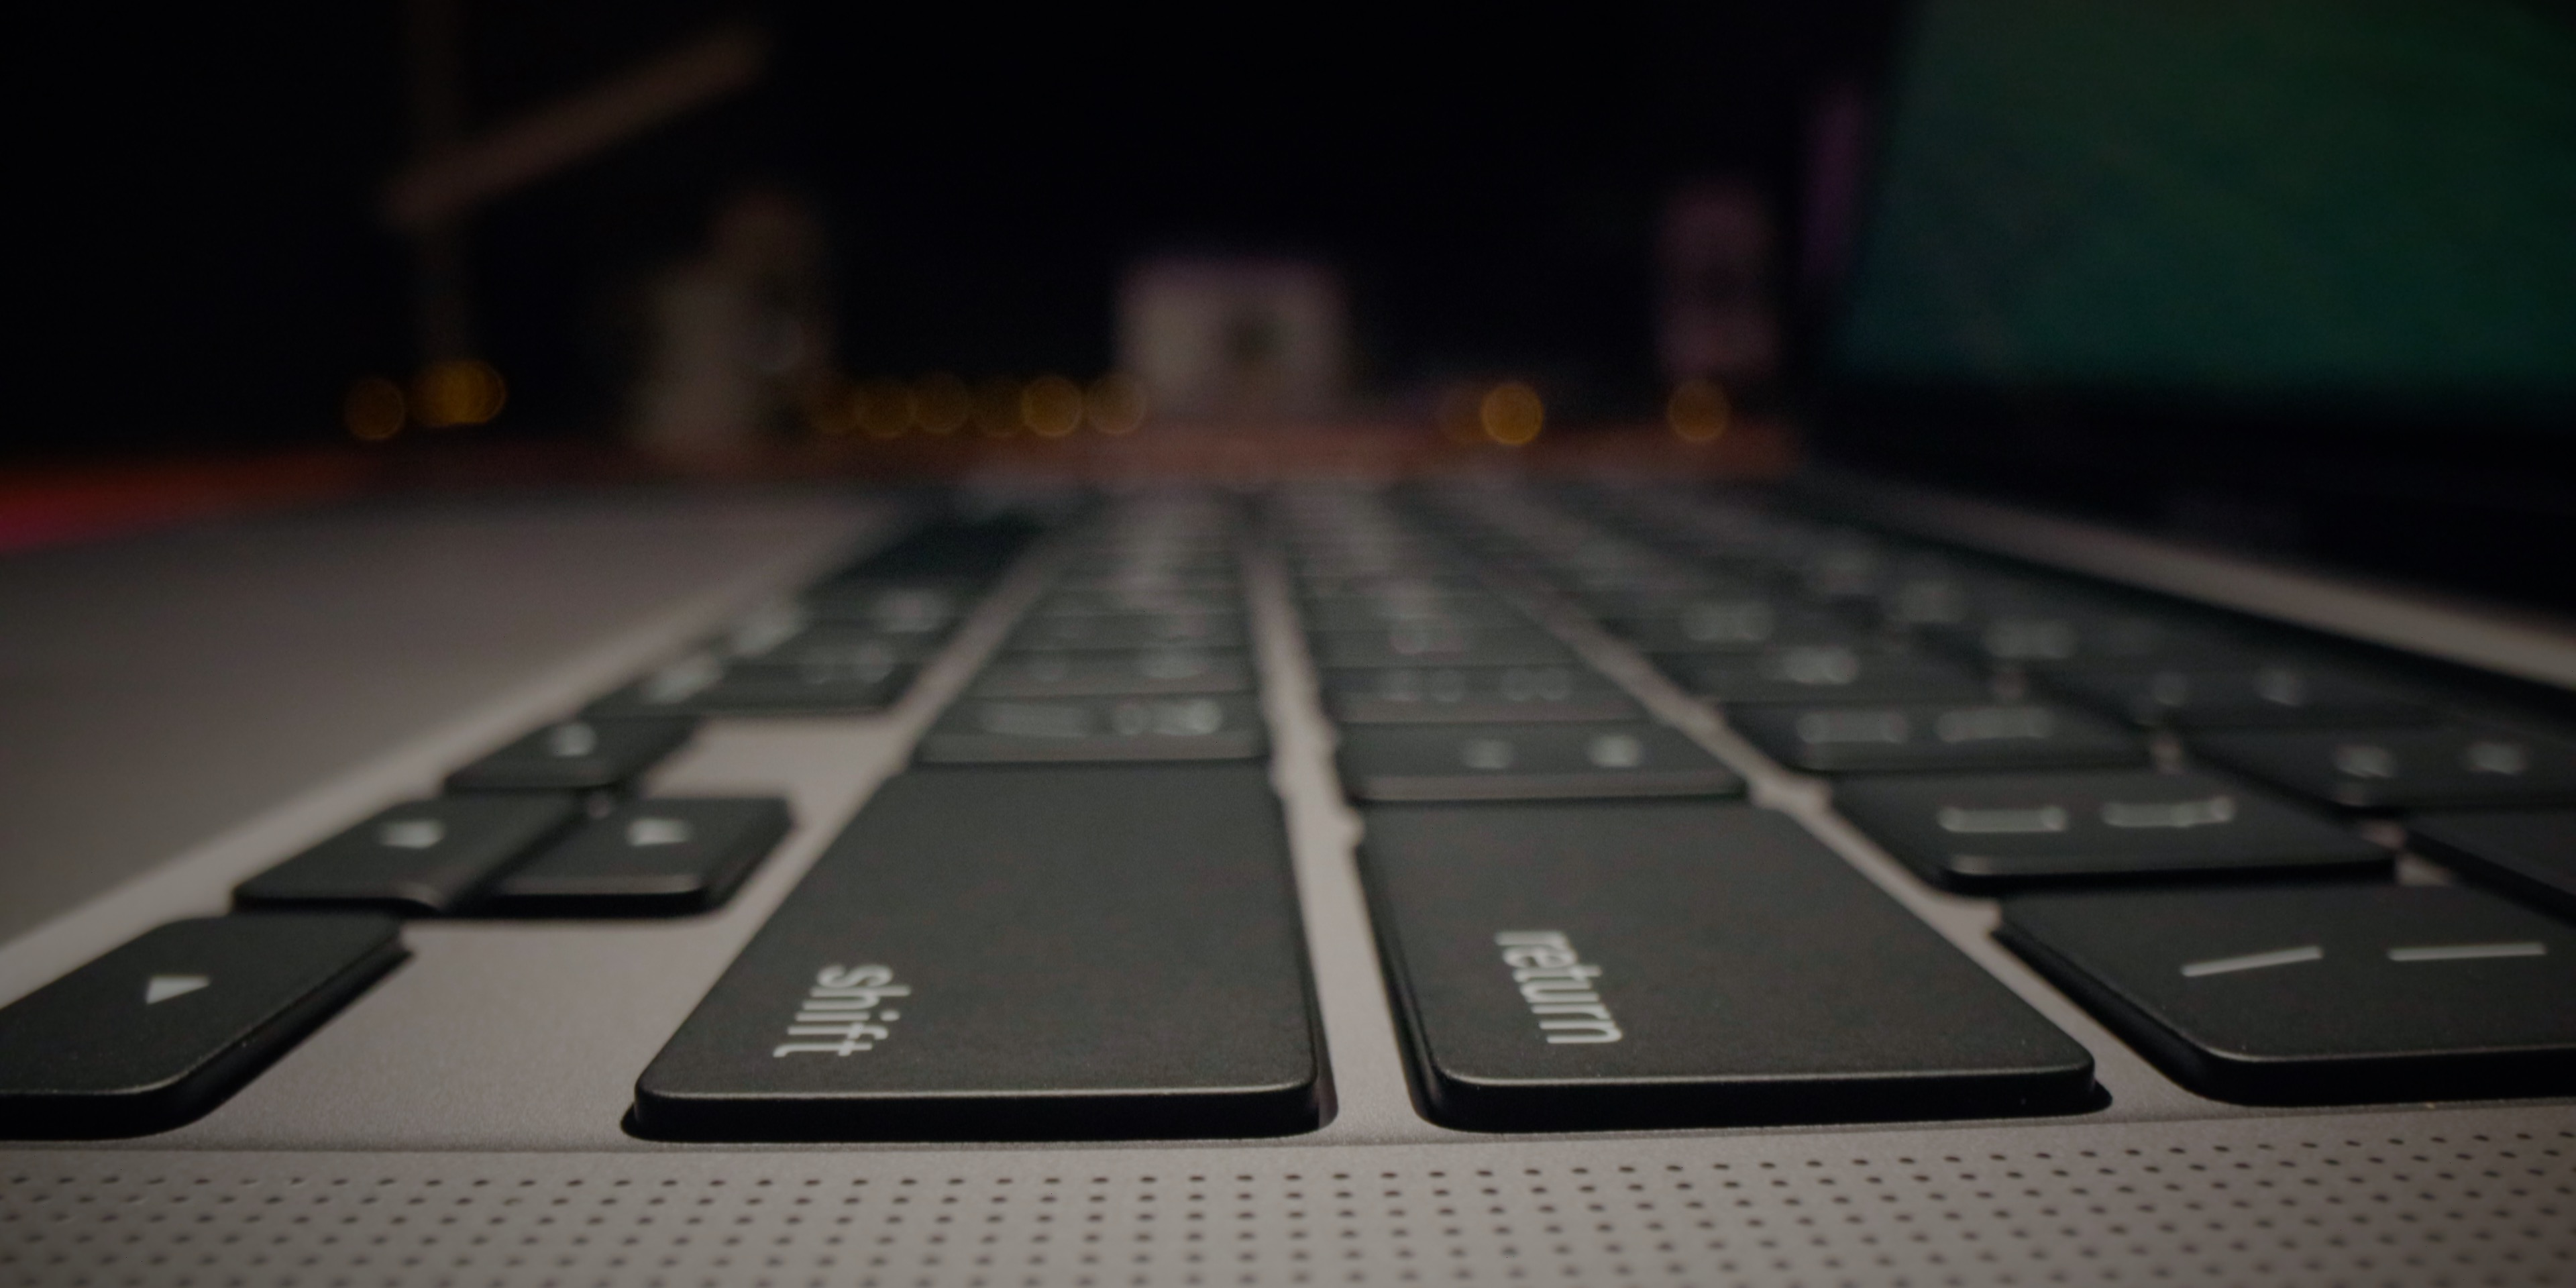 2020 MacBook Pro - keyboard up close